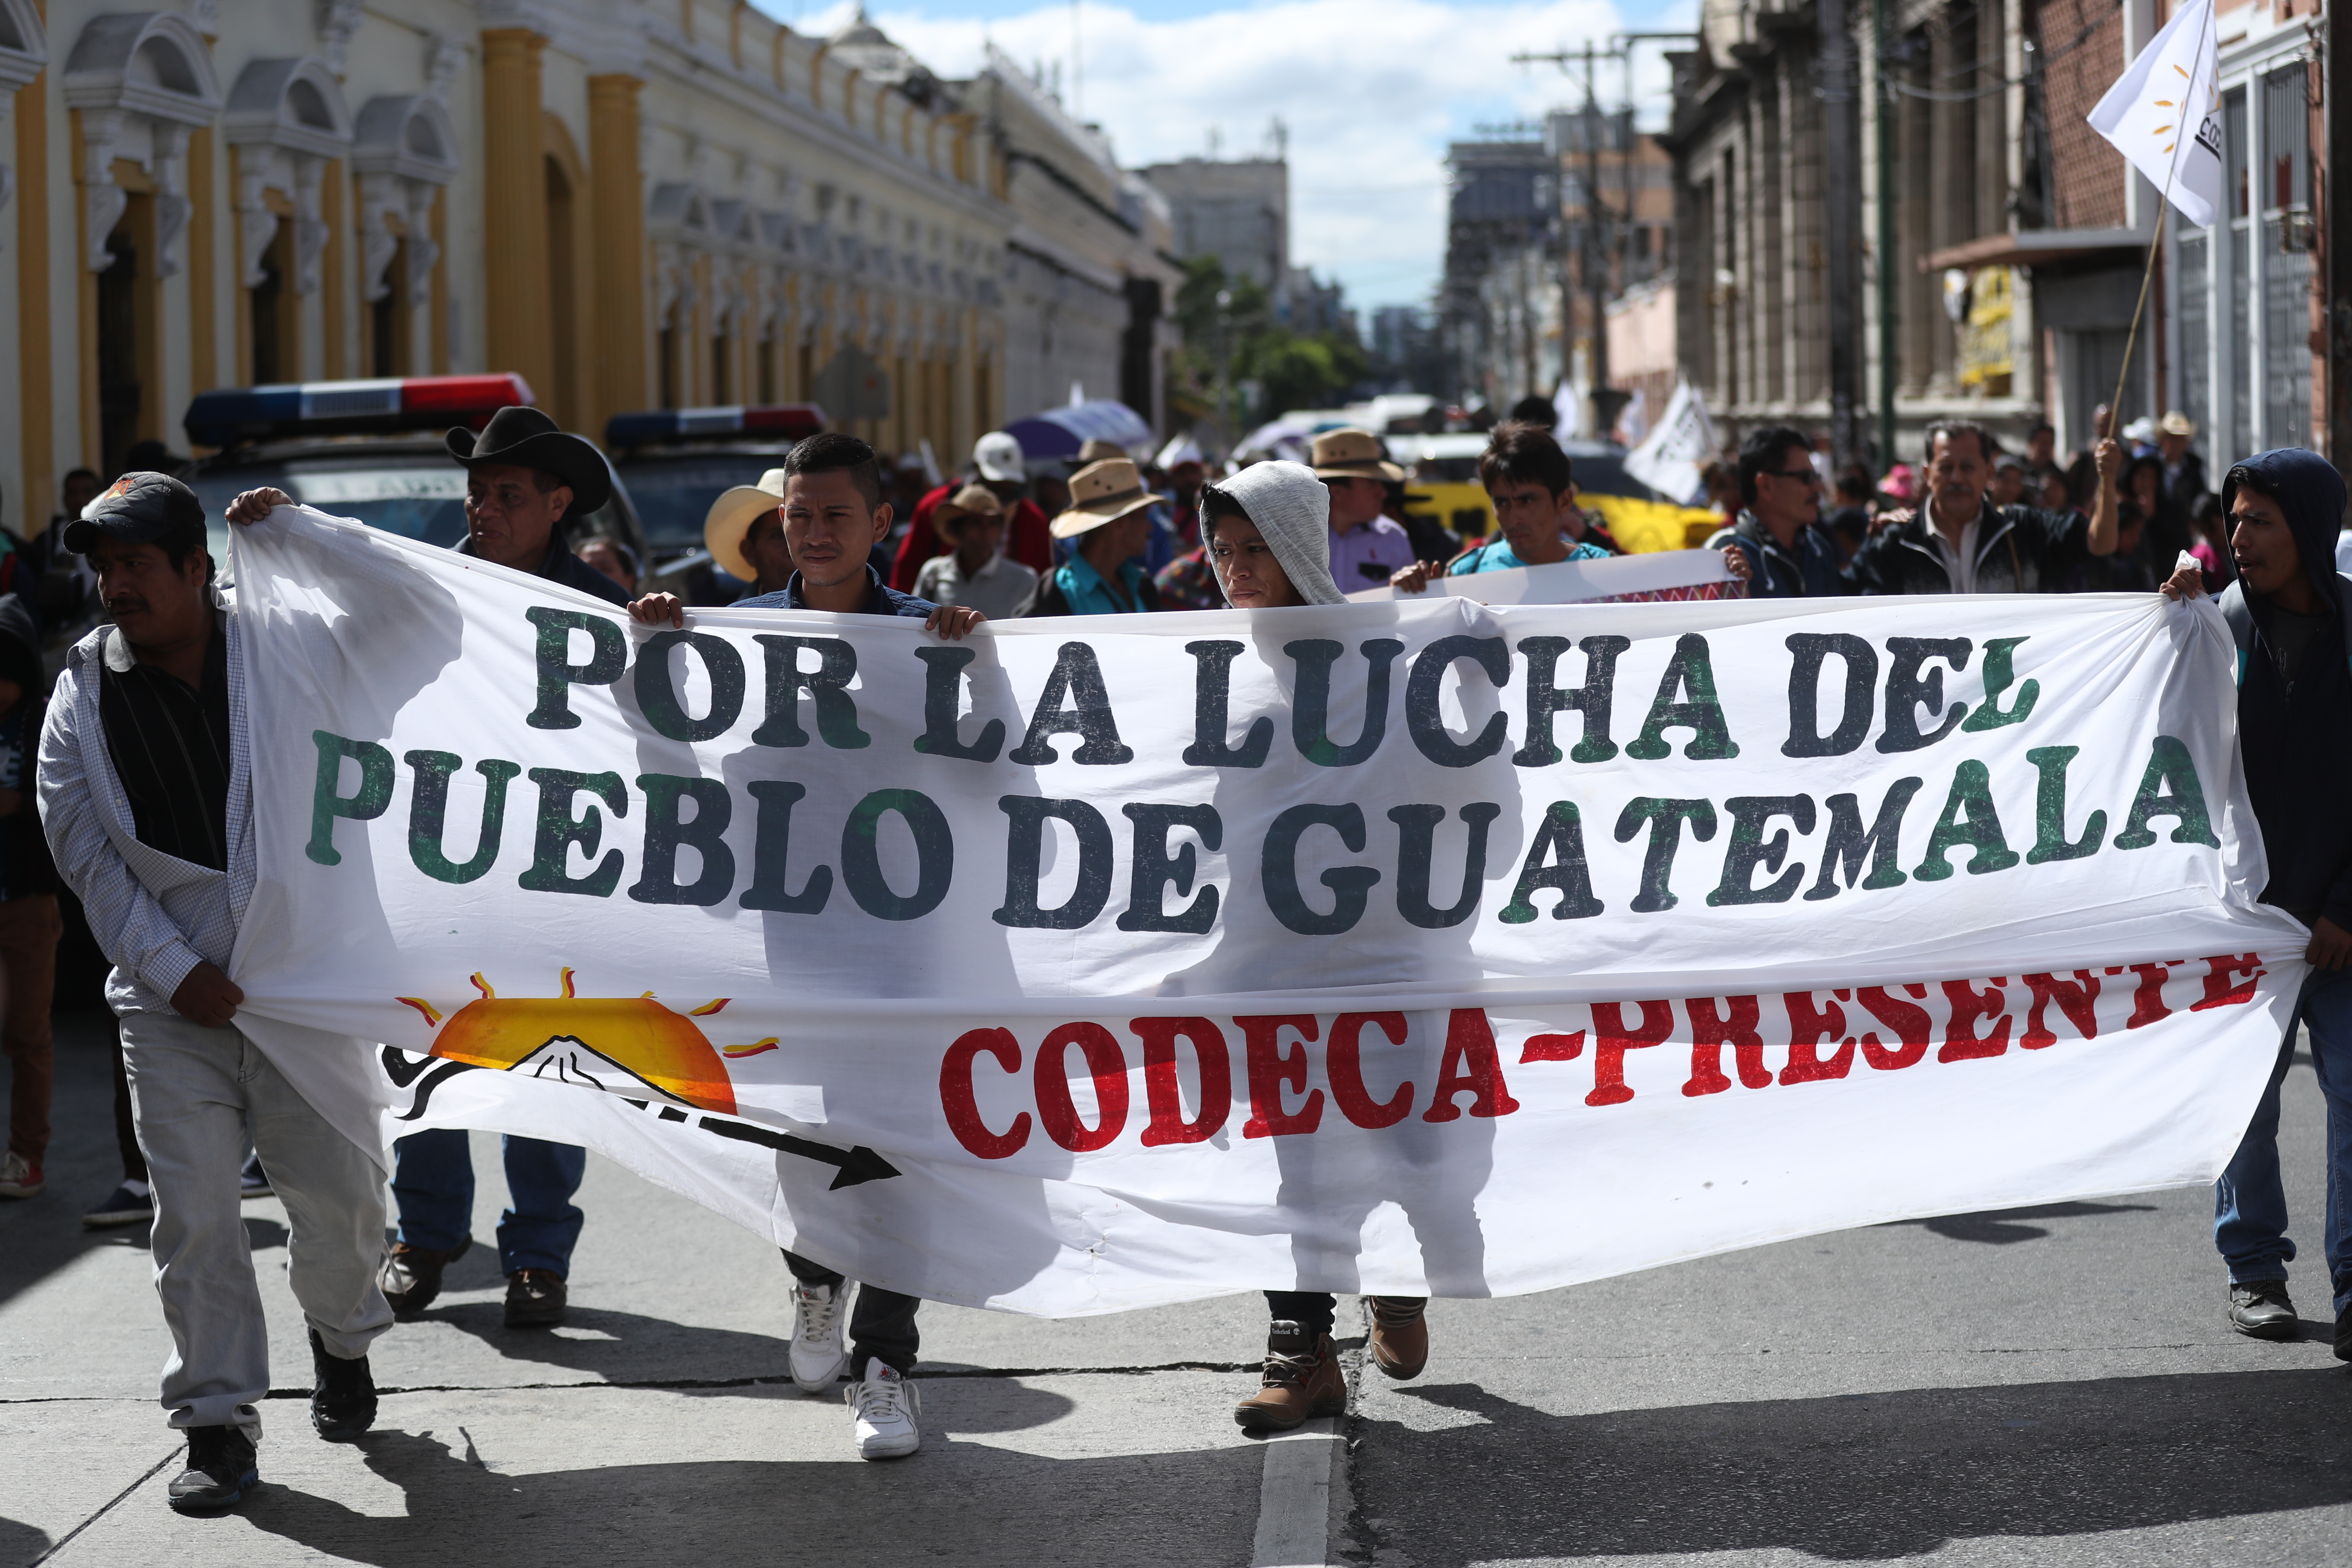 
Integrantes de Codeca protestarán en la capital el jueves 18 de febrero. (Foto Hemeroteca PL)